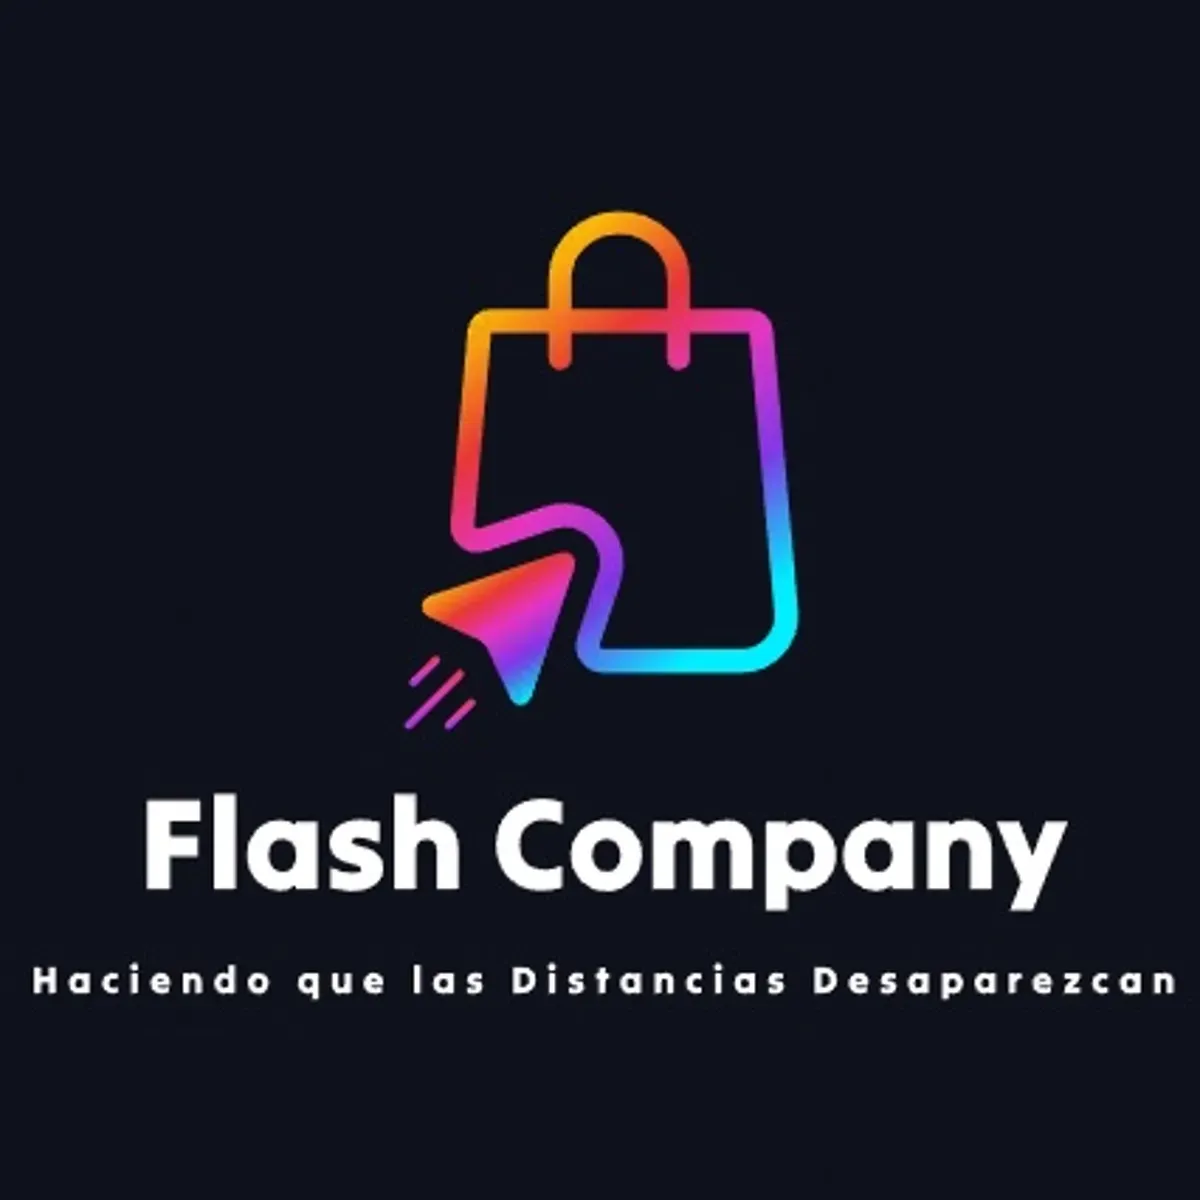 Flash Company